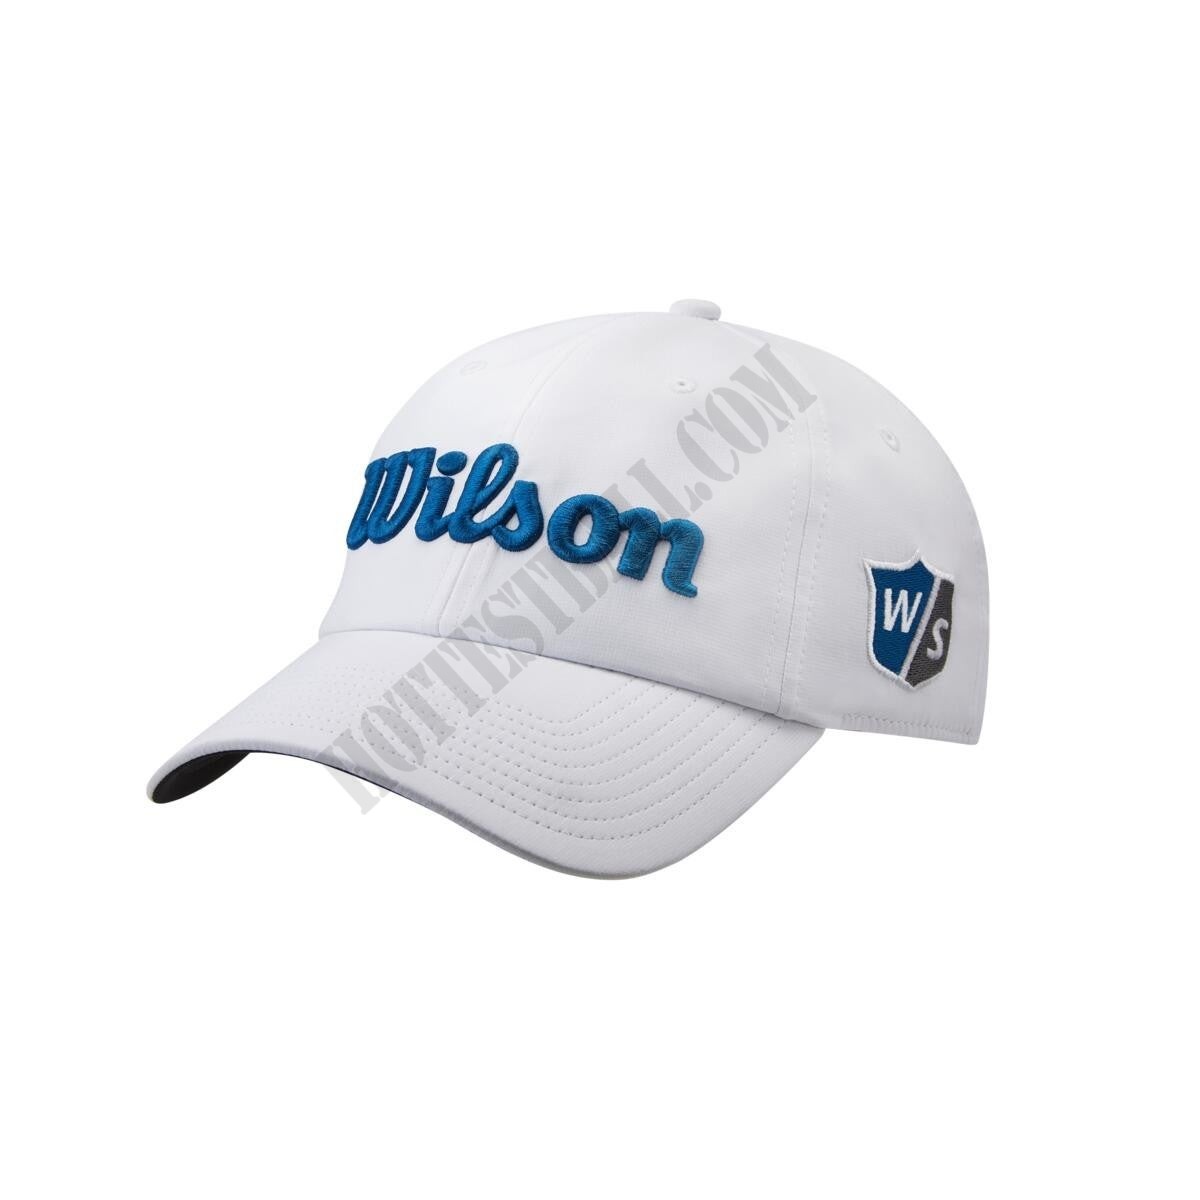 Wilson Pro Tour Hat - Wilson Discount Store - Wilson Pro Tour Hat - Wilson Discount Store